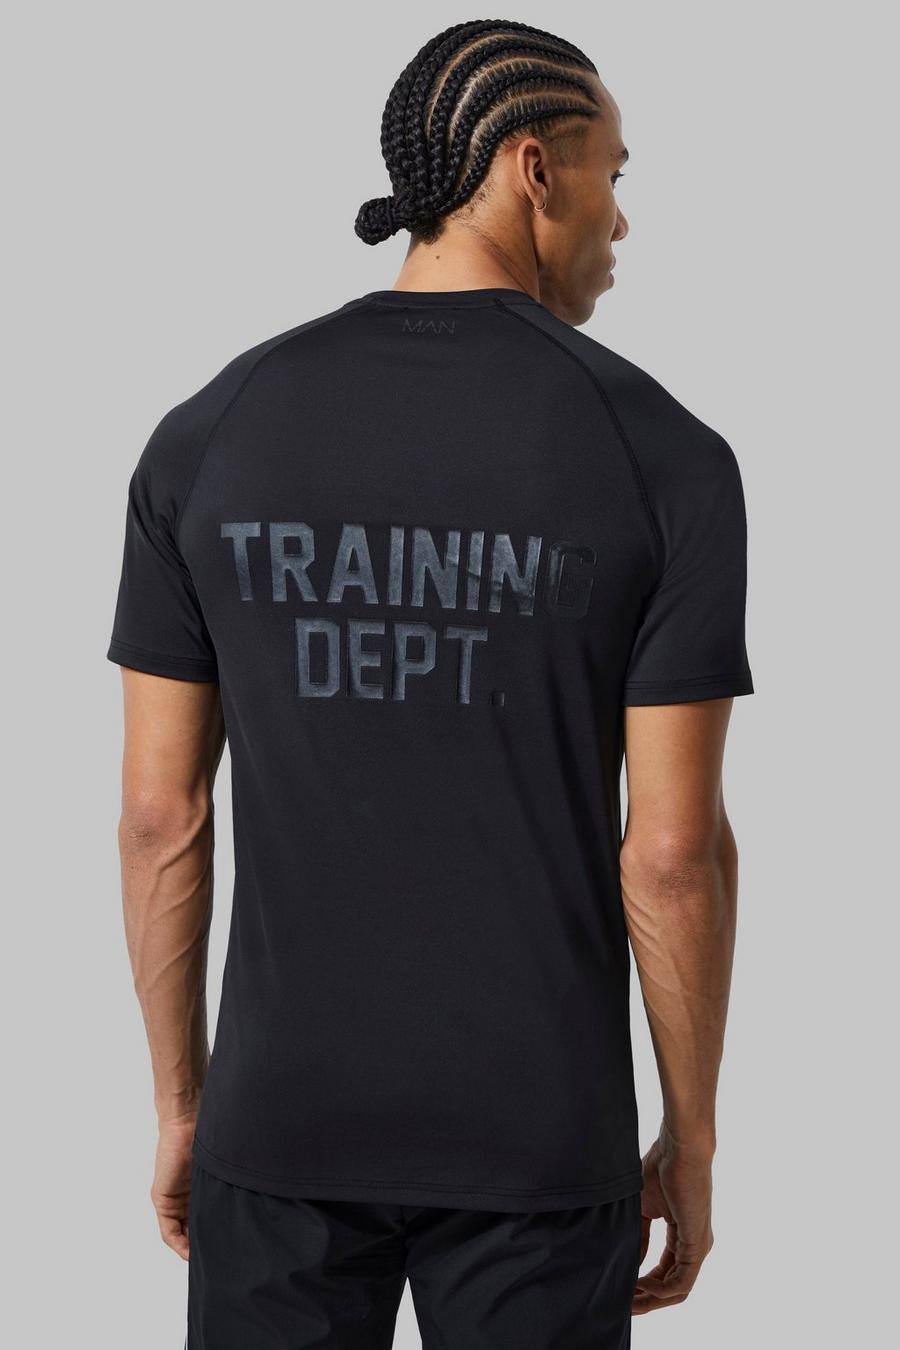 T-shirt attillata Tall Man Active Training Dept, Black nero